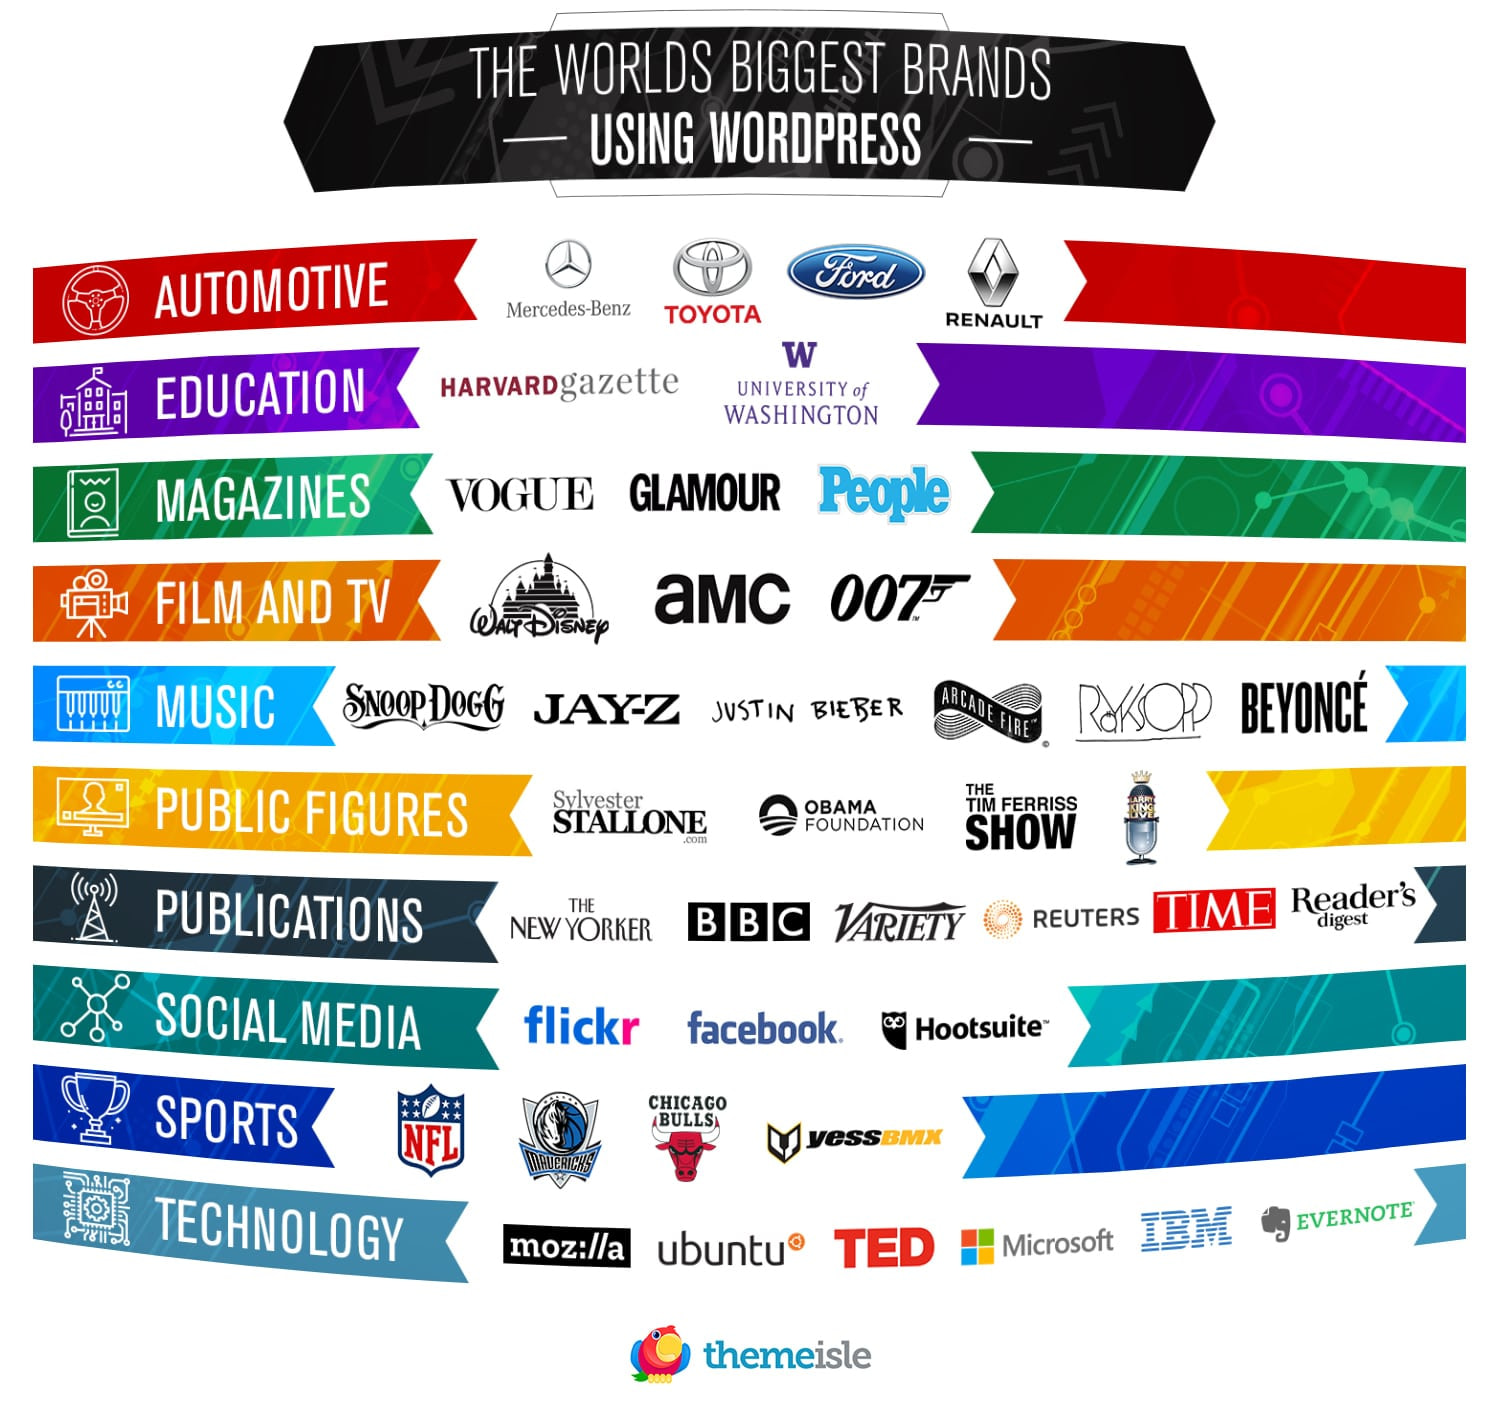 famous brands using WordPress